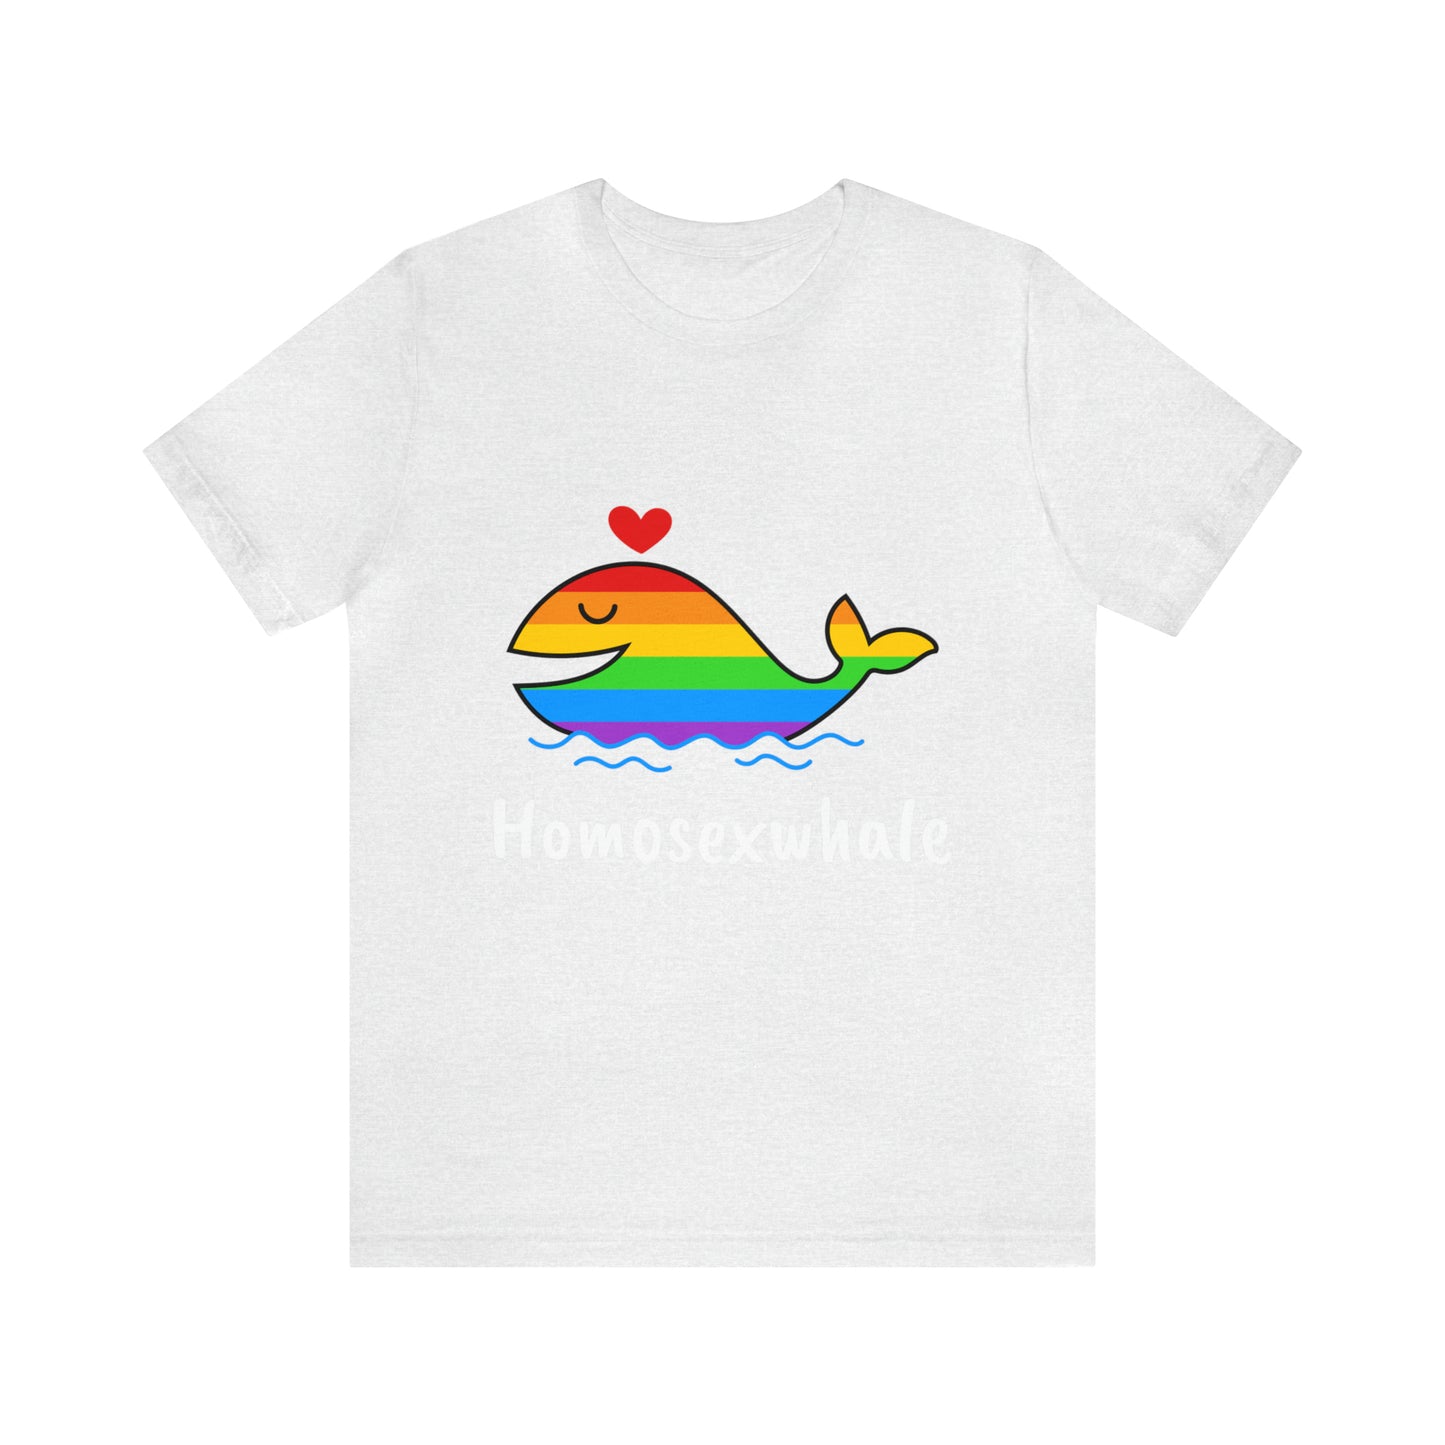 Homosexwhale - Unisex T-Shirt